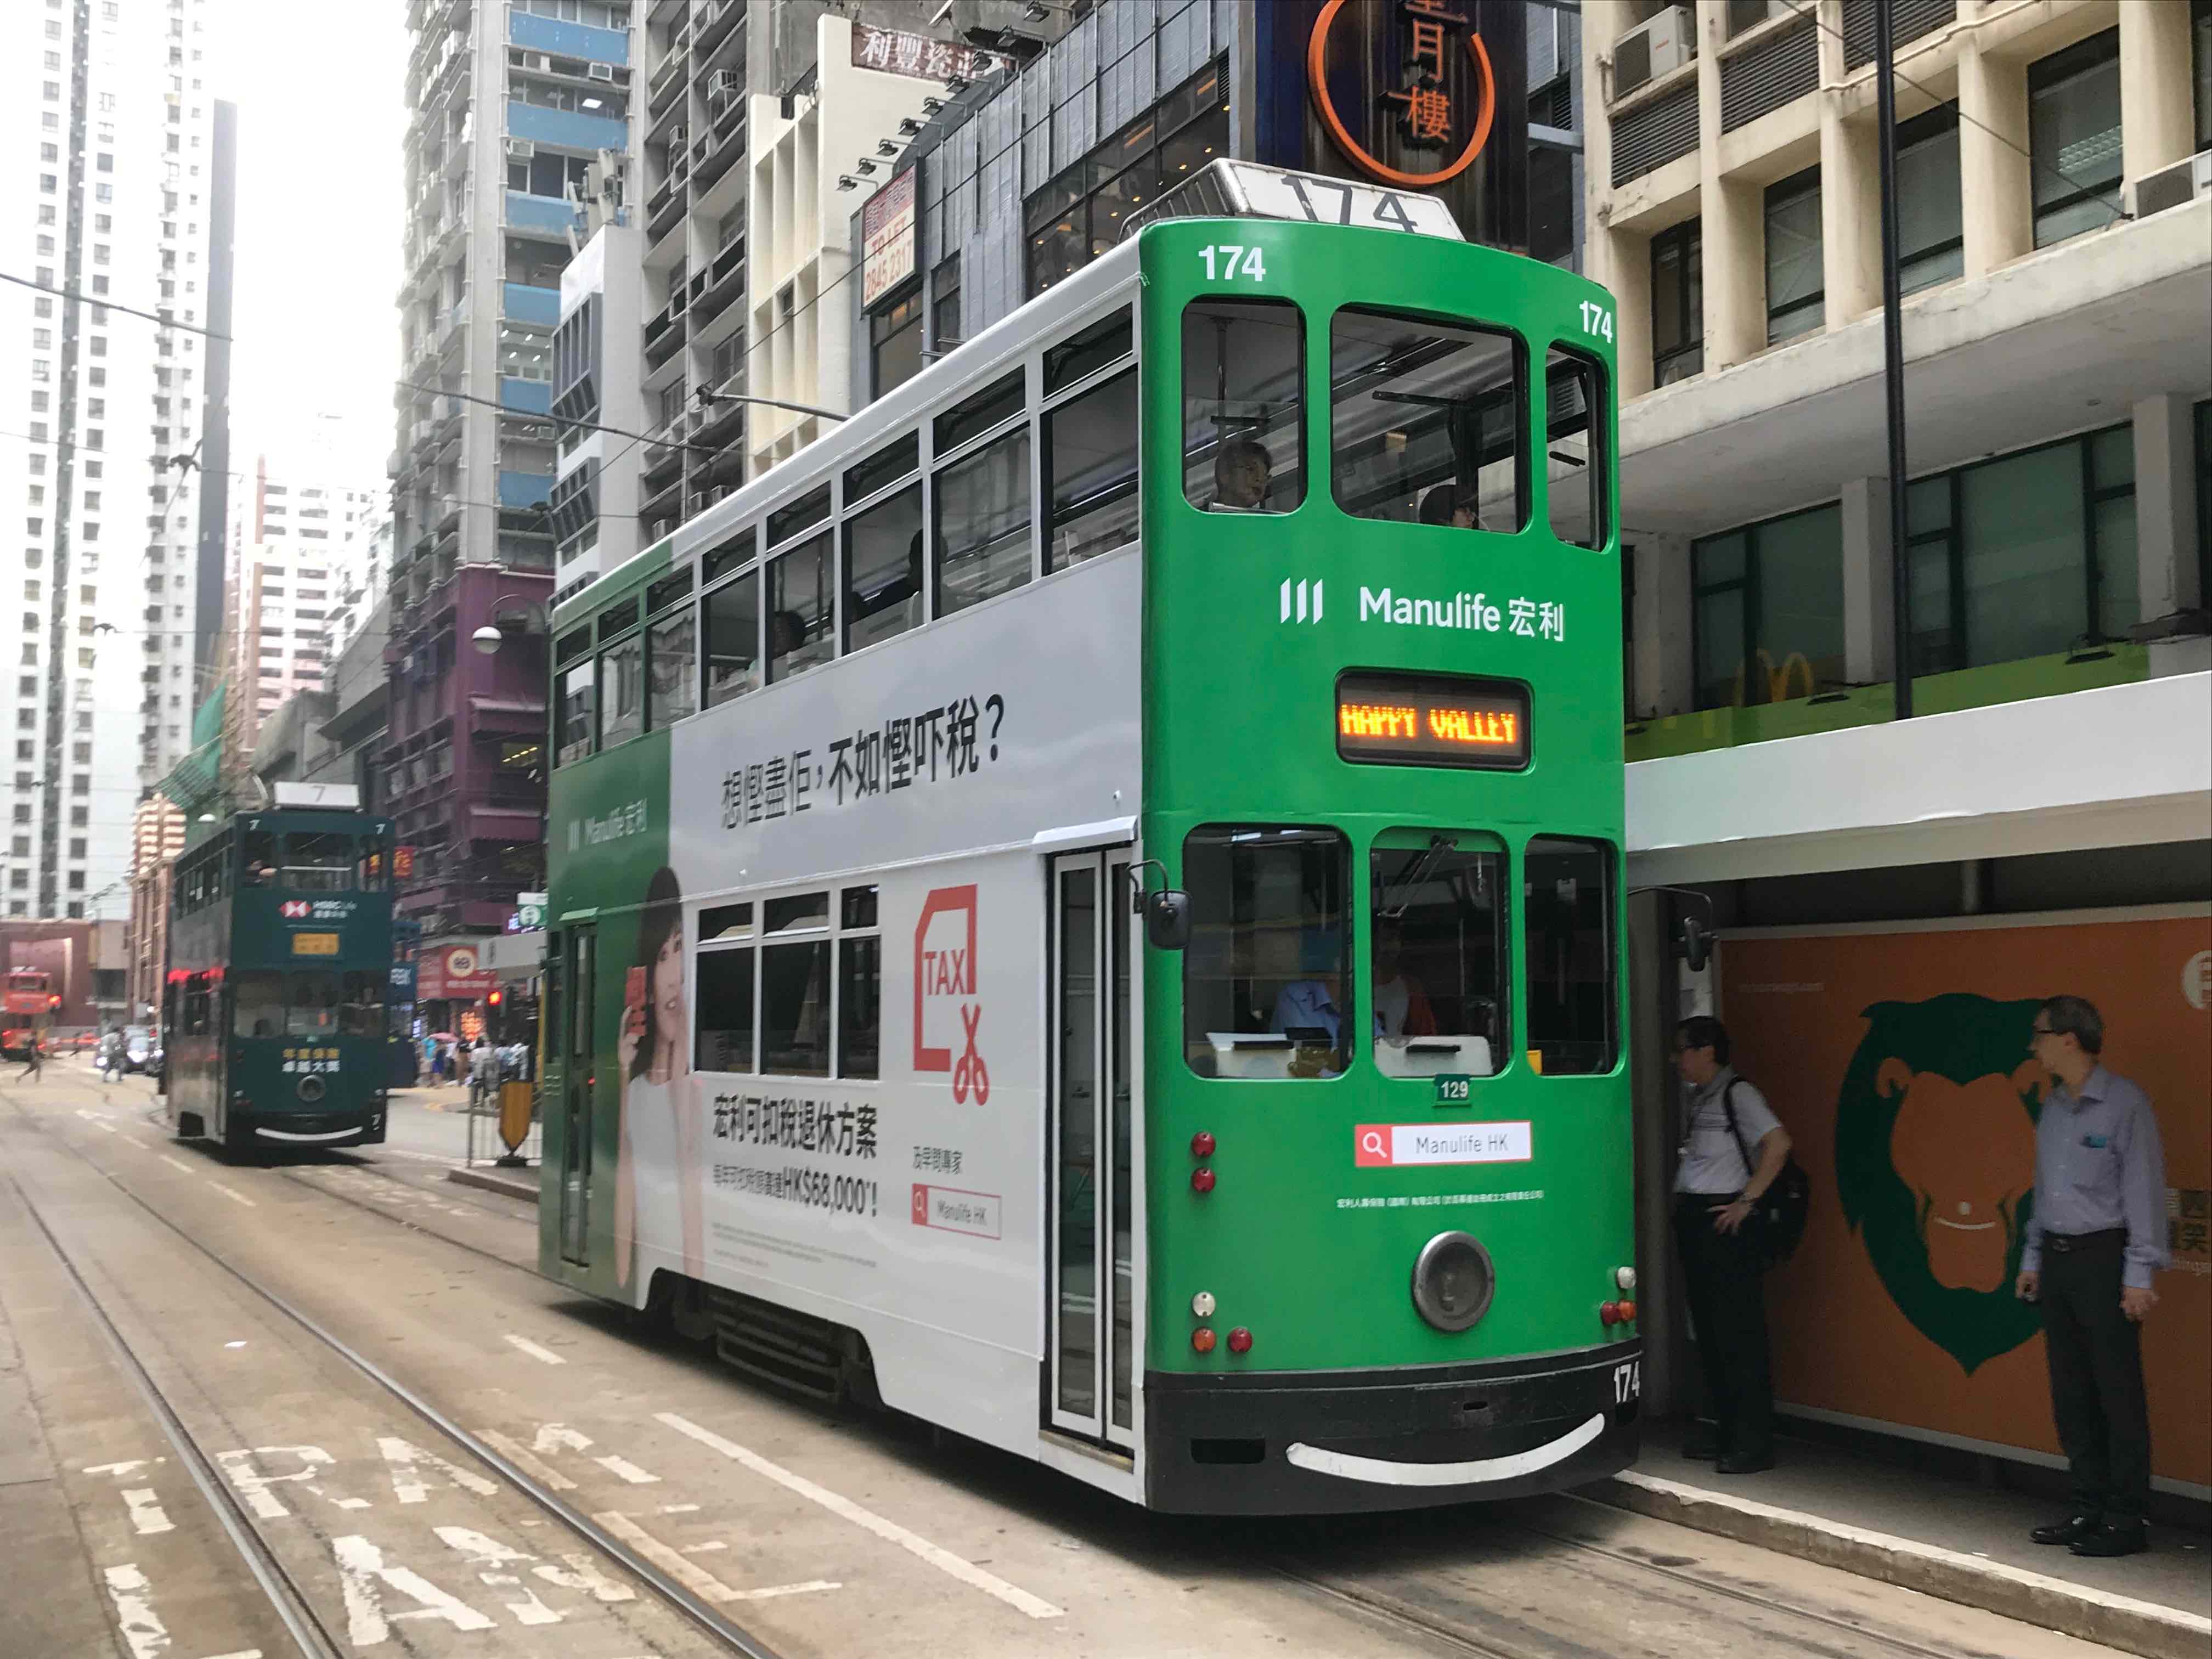 hk-tram-01-featured.jpg